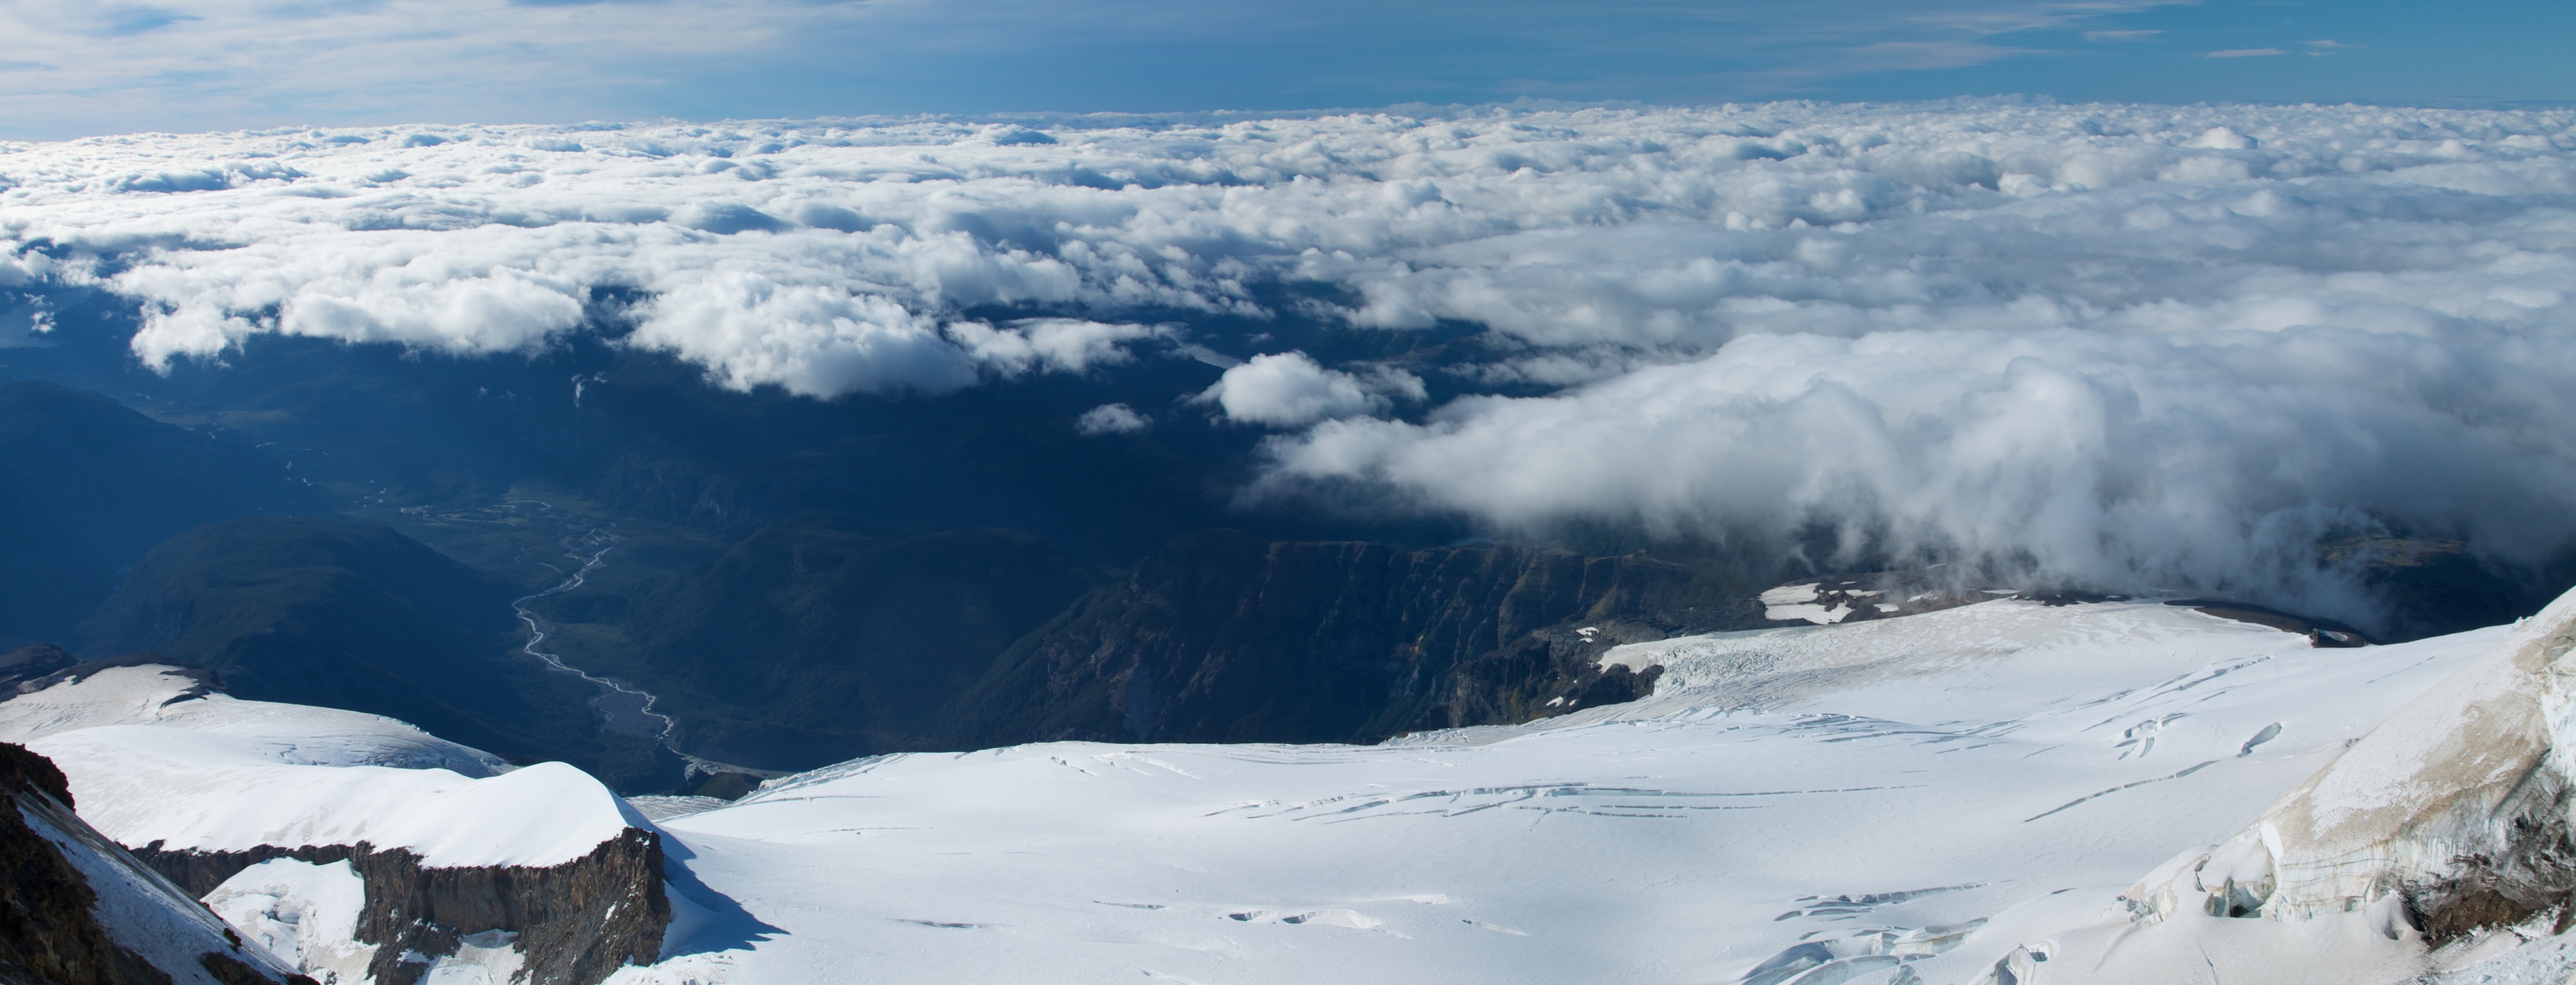 Argentina - Mt Tronador Ascent - 25 - above the clouds (6962456035)